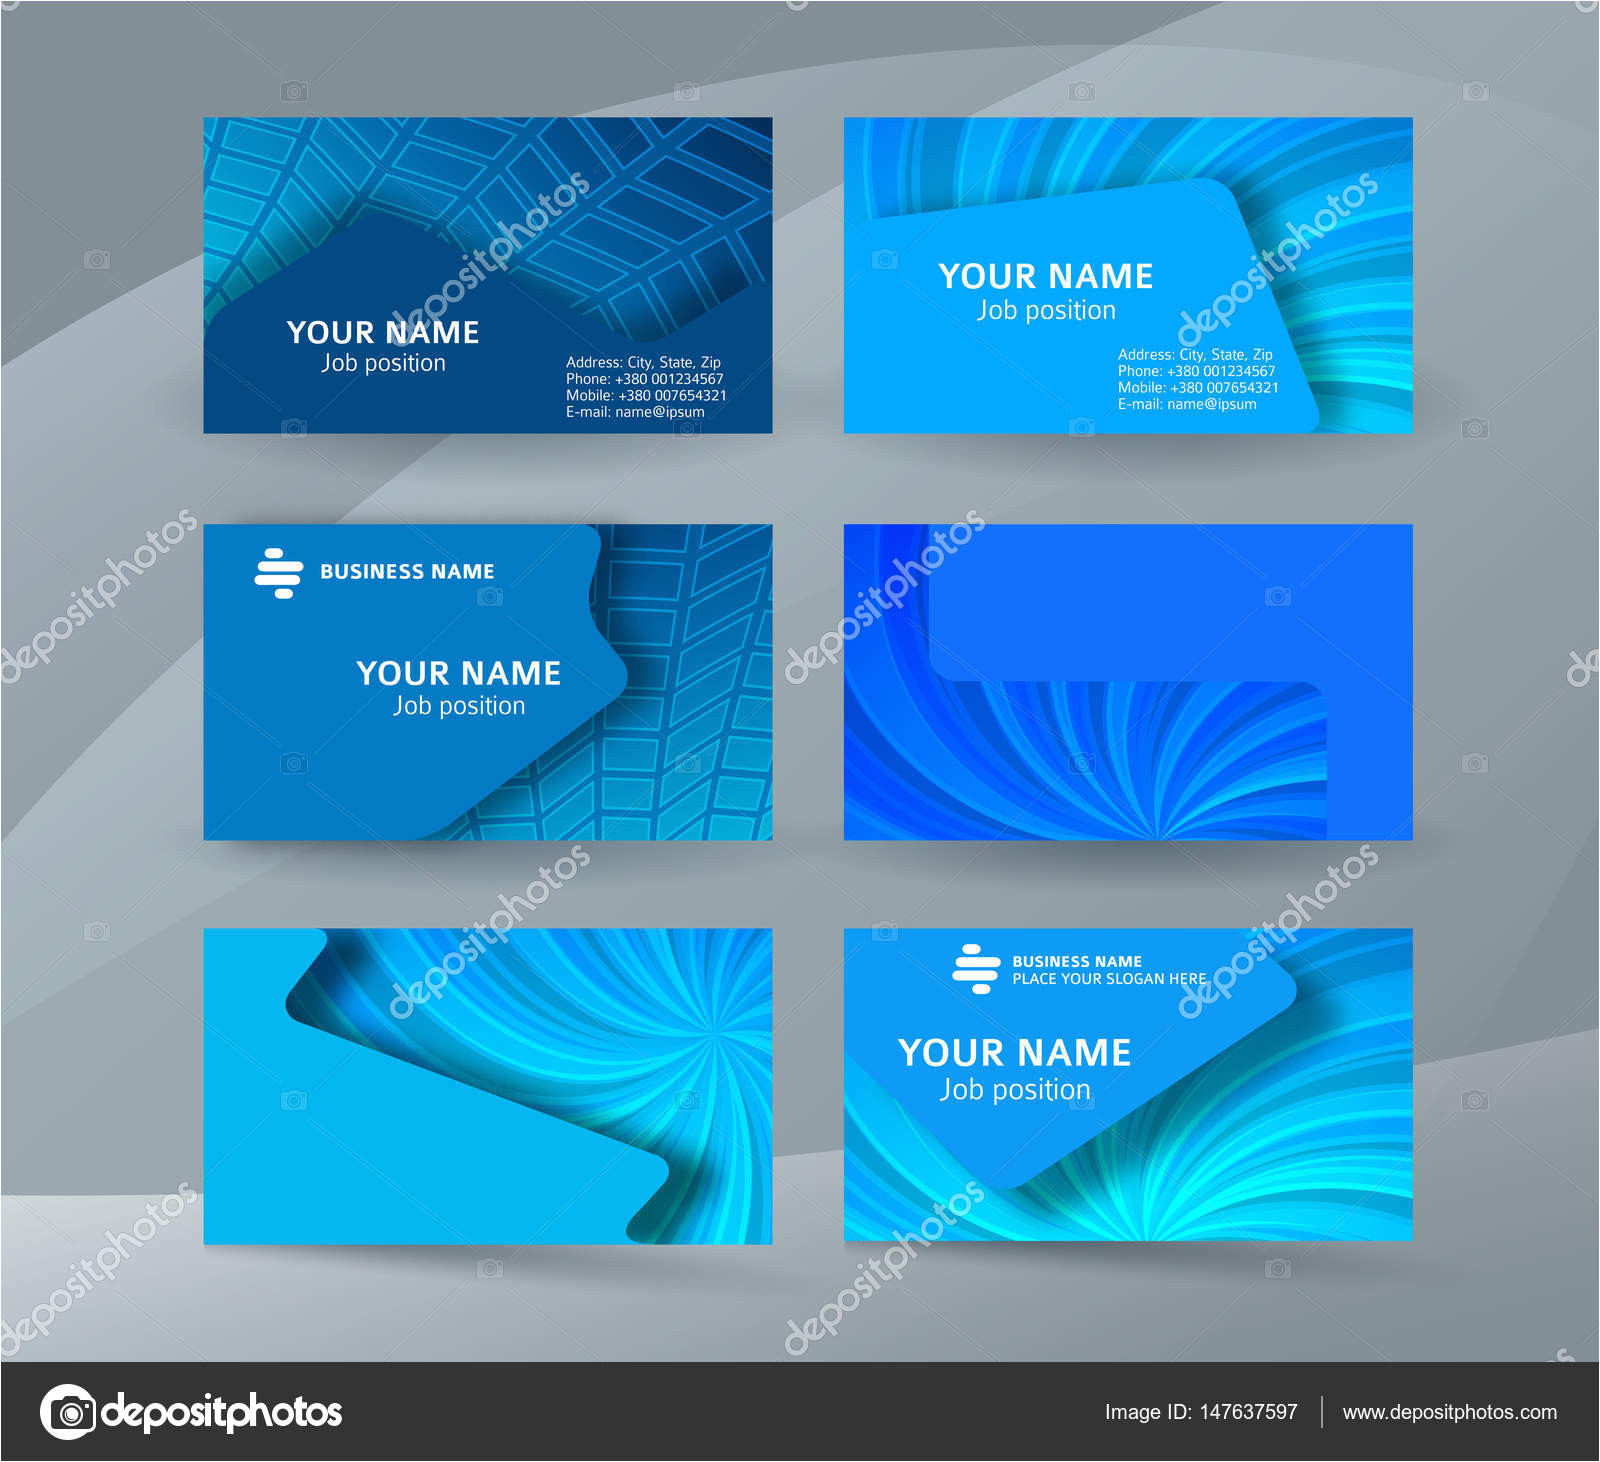 depositphotos 147637597 stock illustration business card background blue set jpg